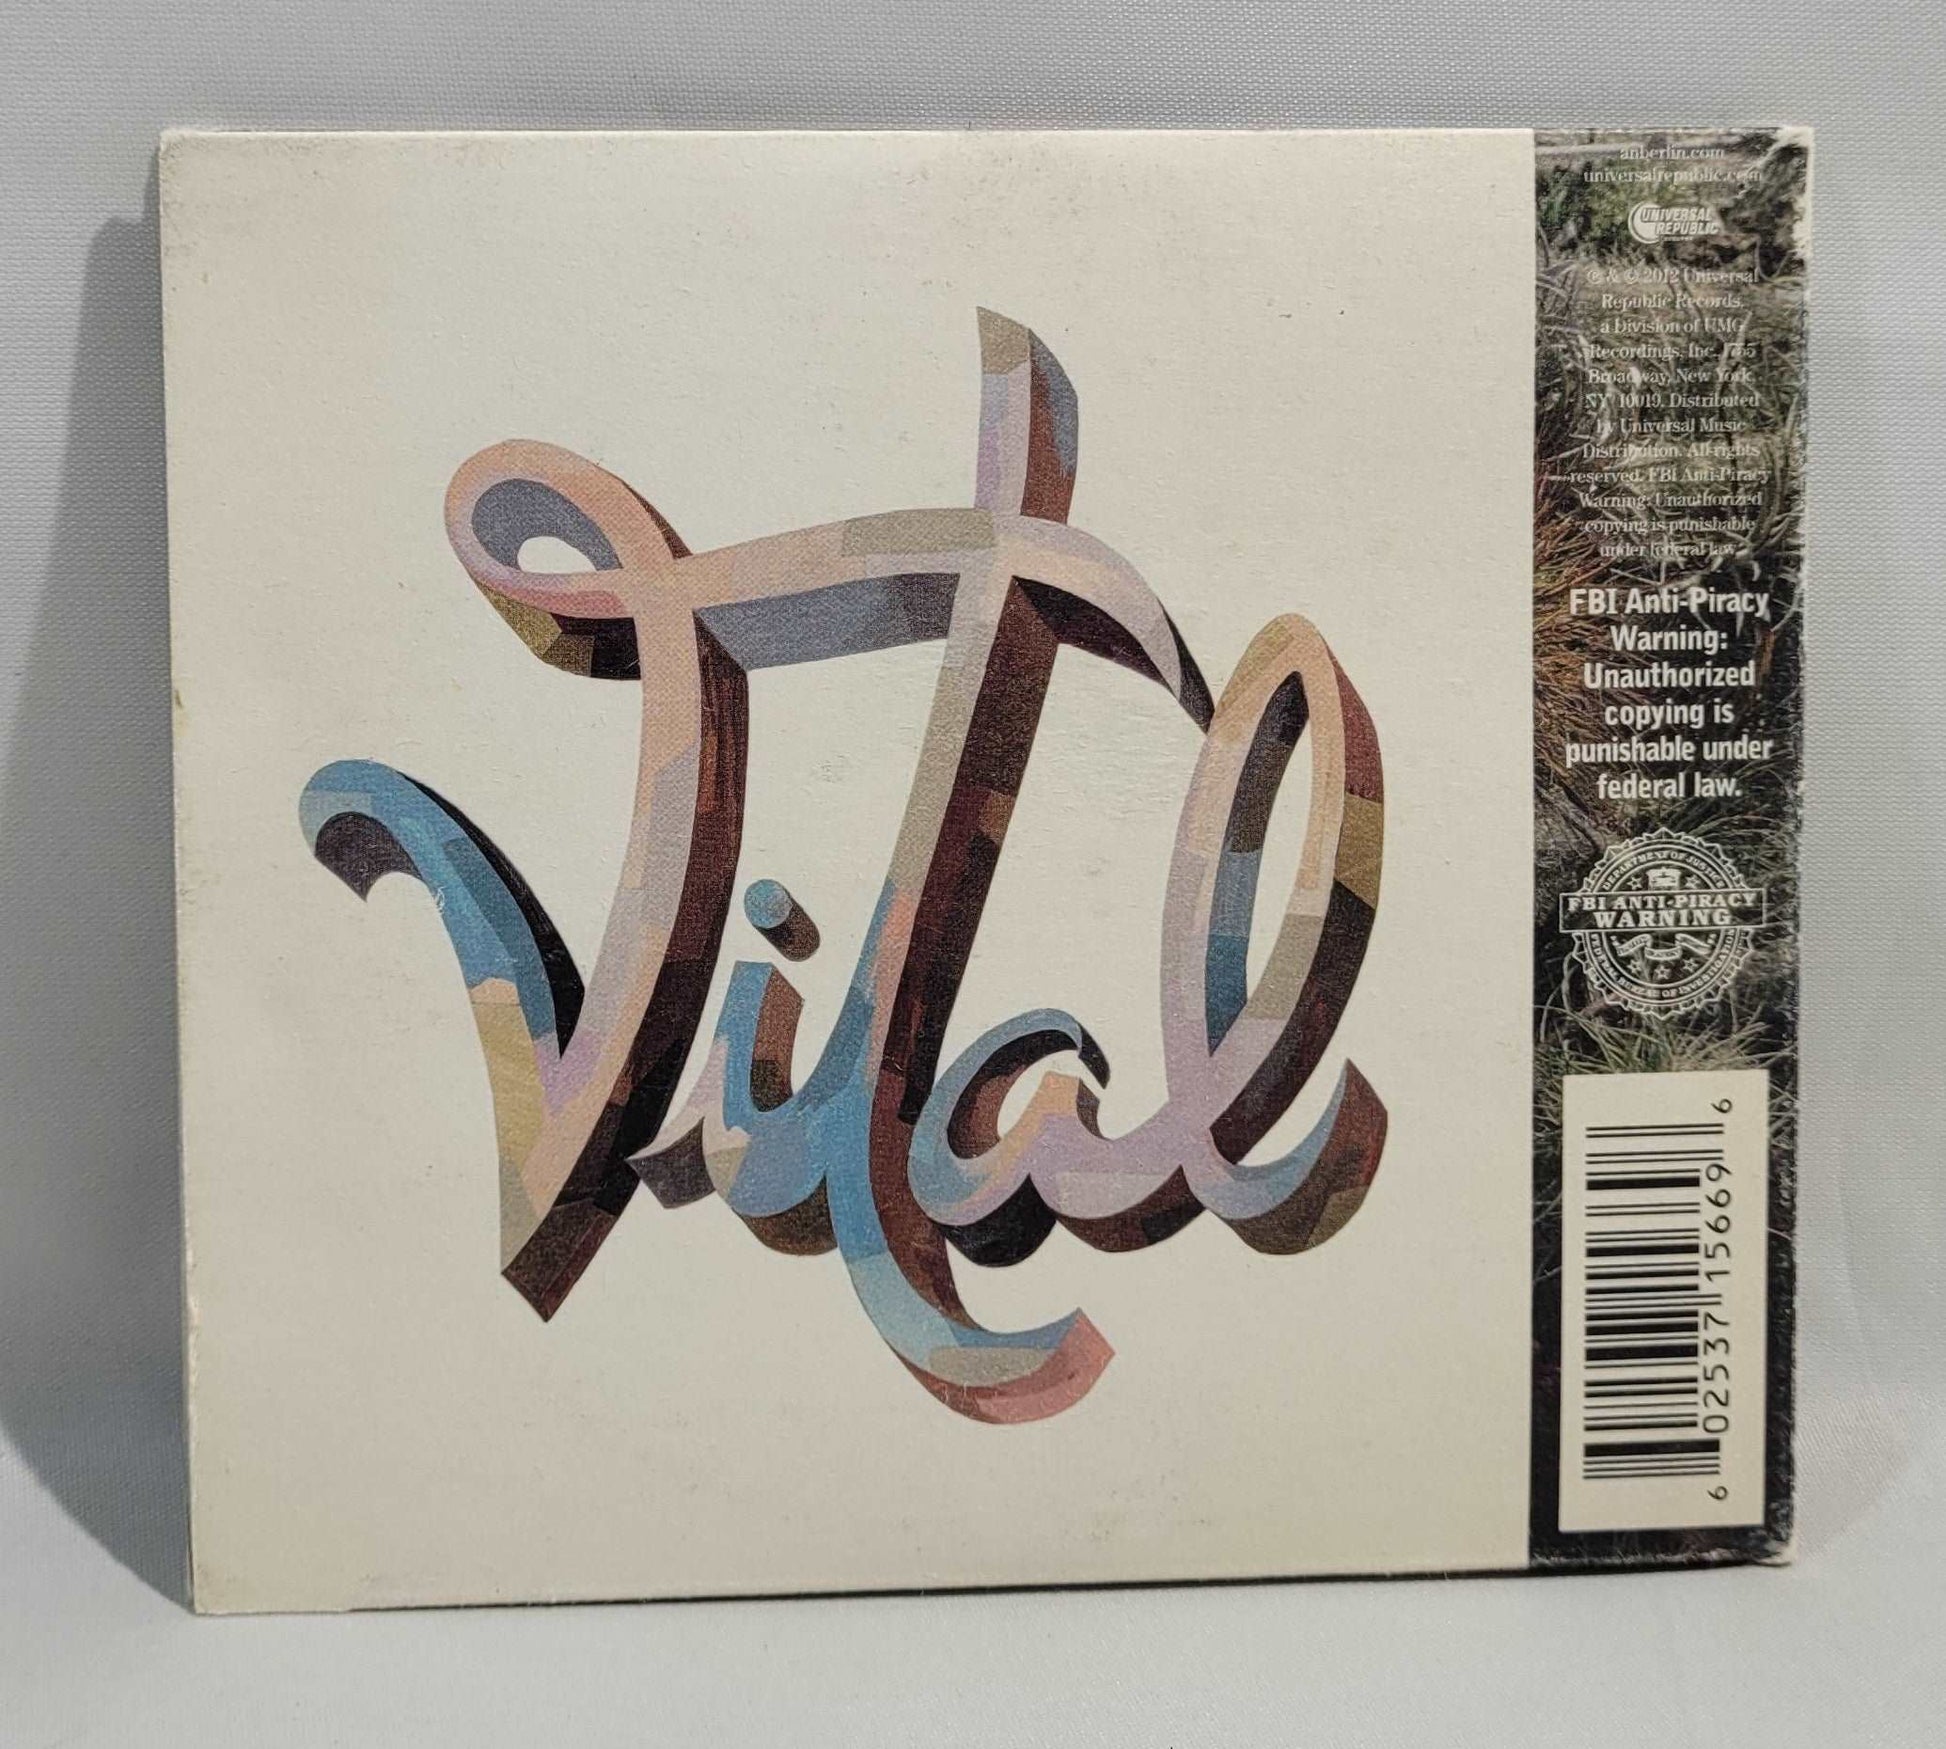 Anberlin - Vital [CD]